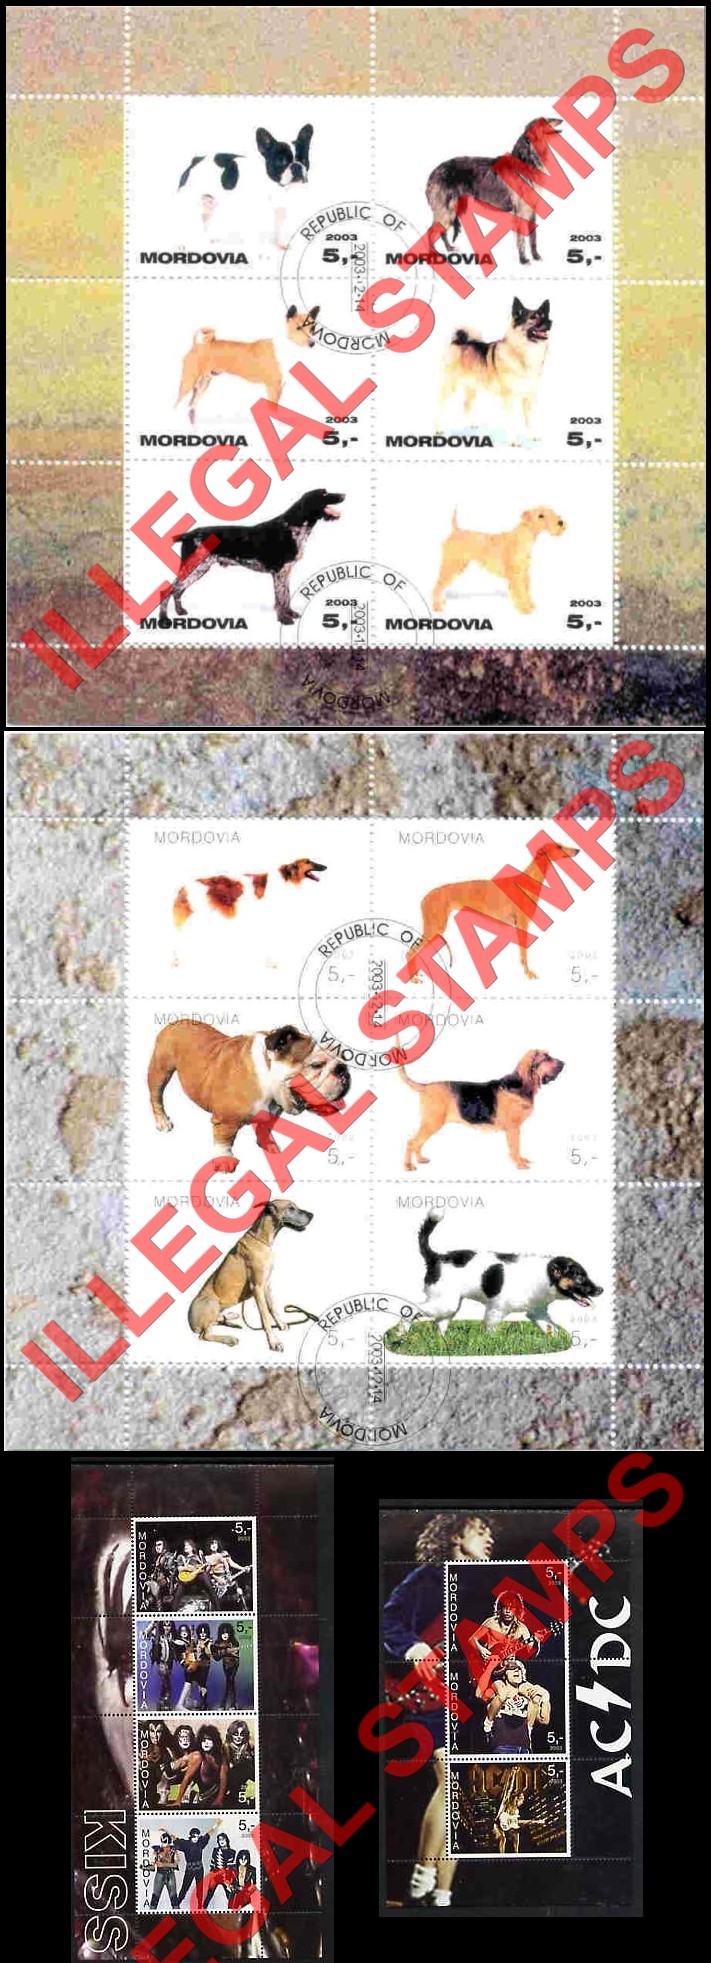 Republic of Mordovia 2003 Counterfeit Illegal Stamps